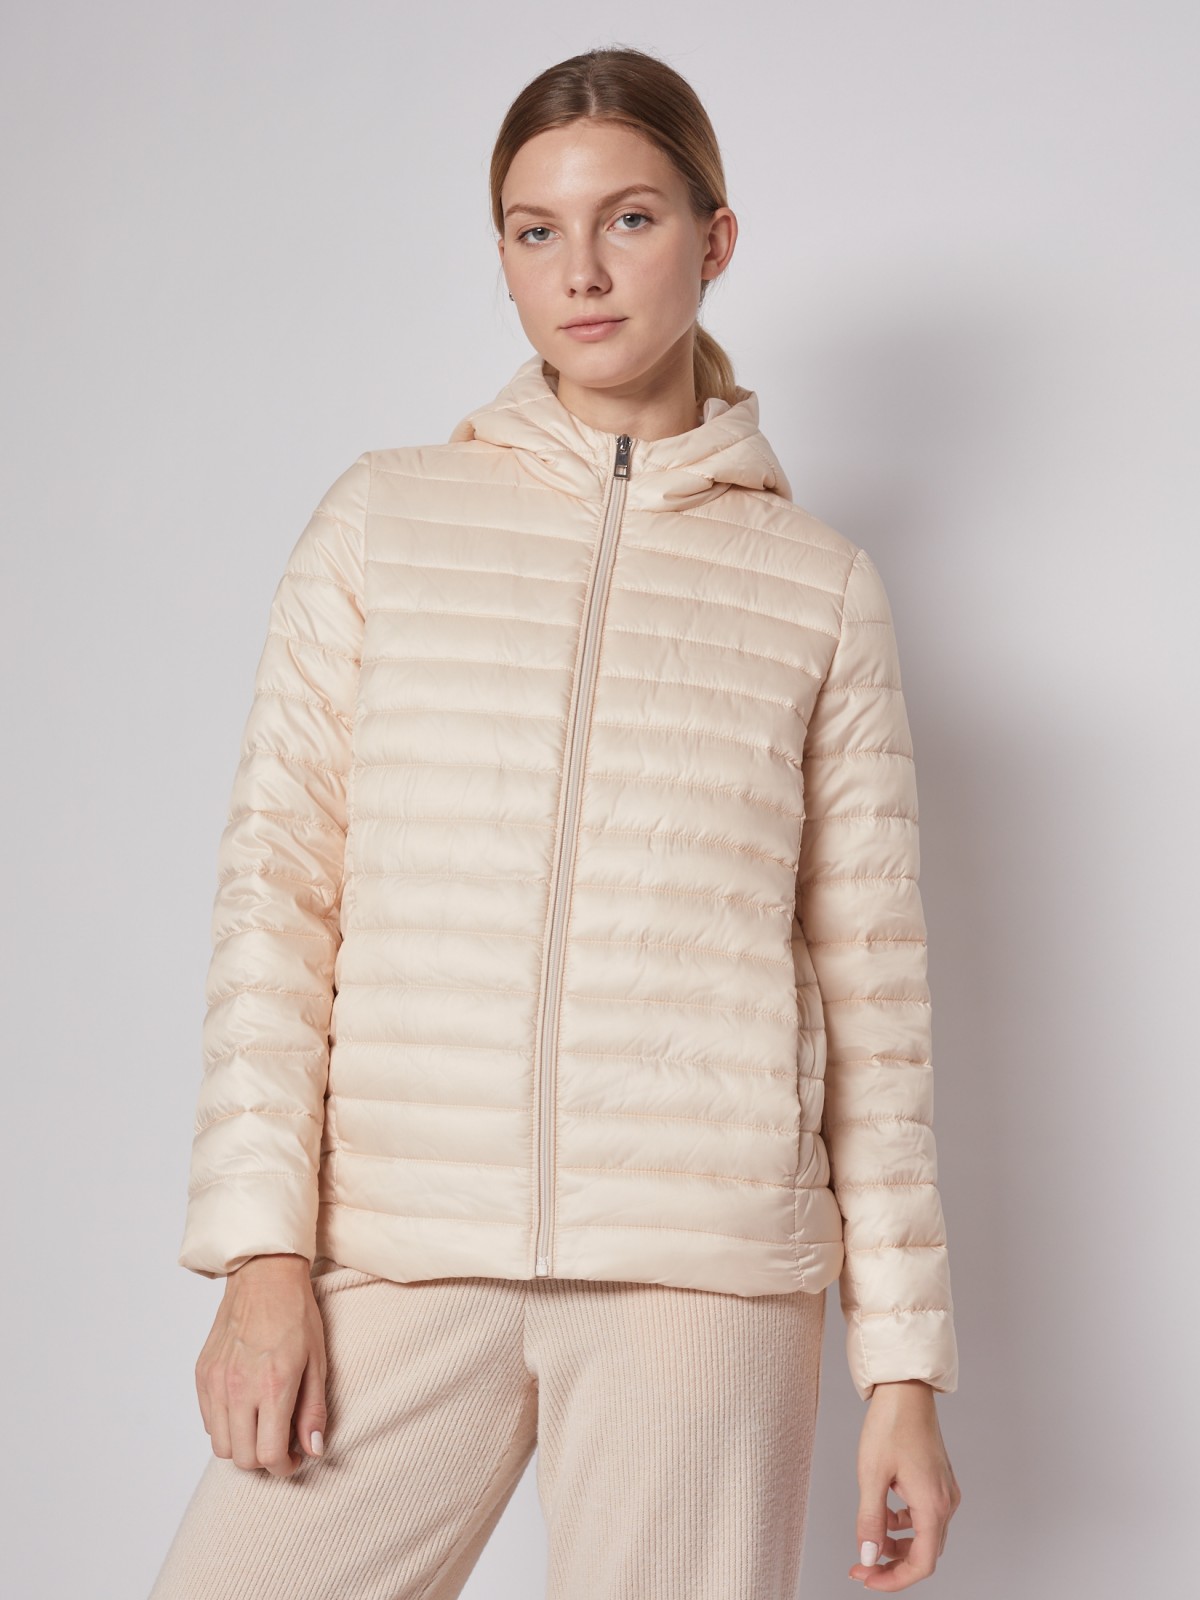 Утеплённая стёганая куртка с капюшоном zolla 022125112224, цвет розовый, размер XS - фото 2